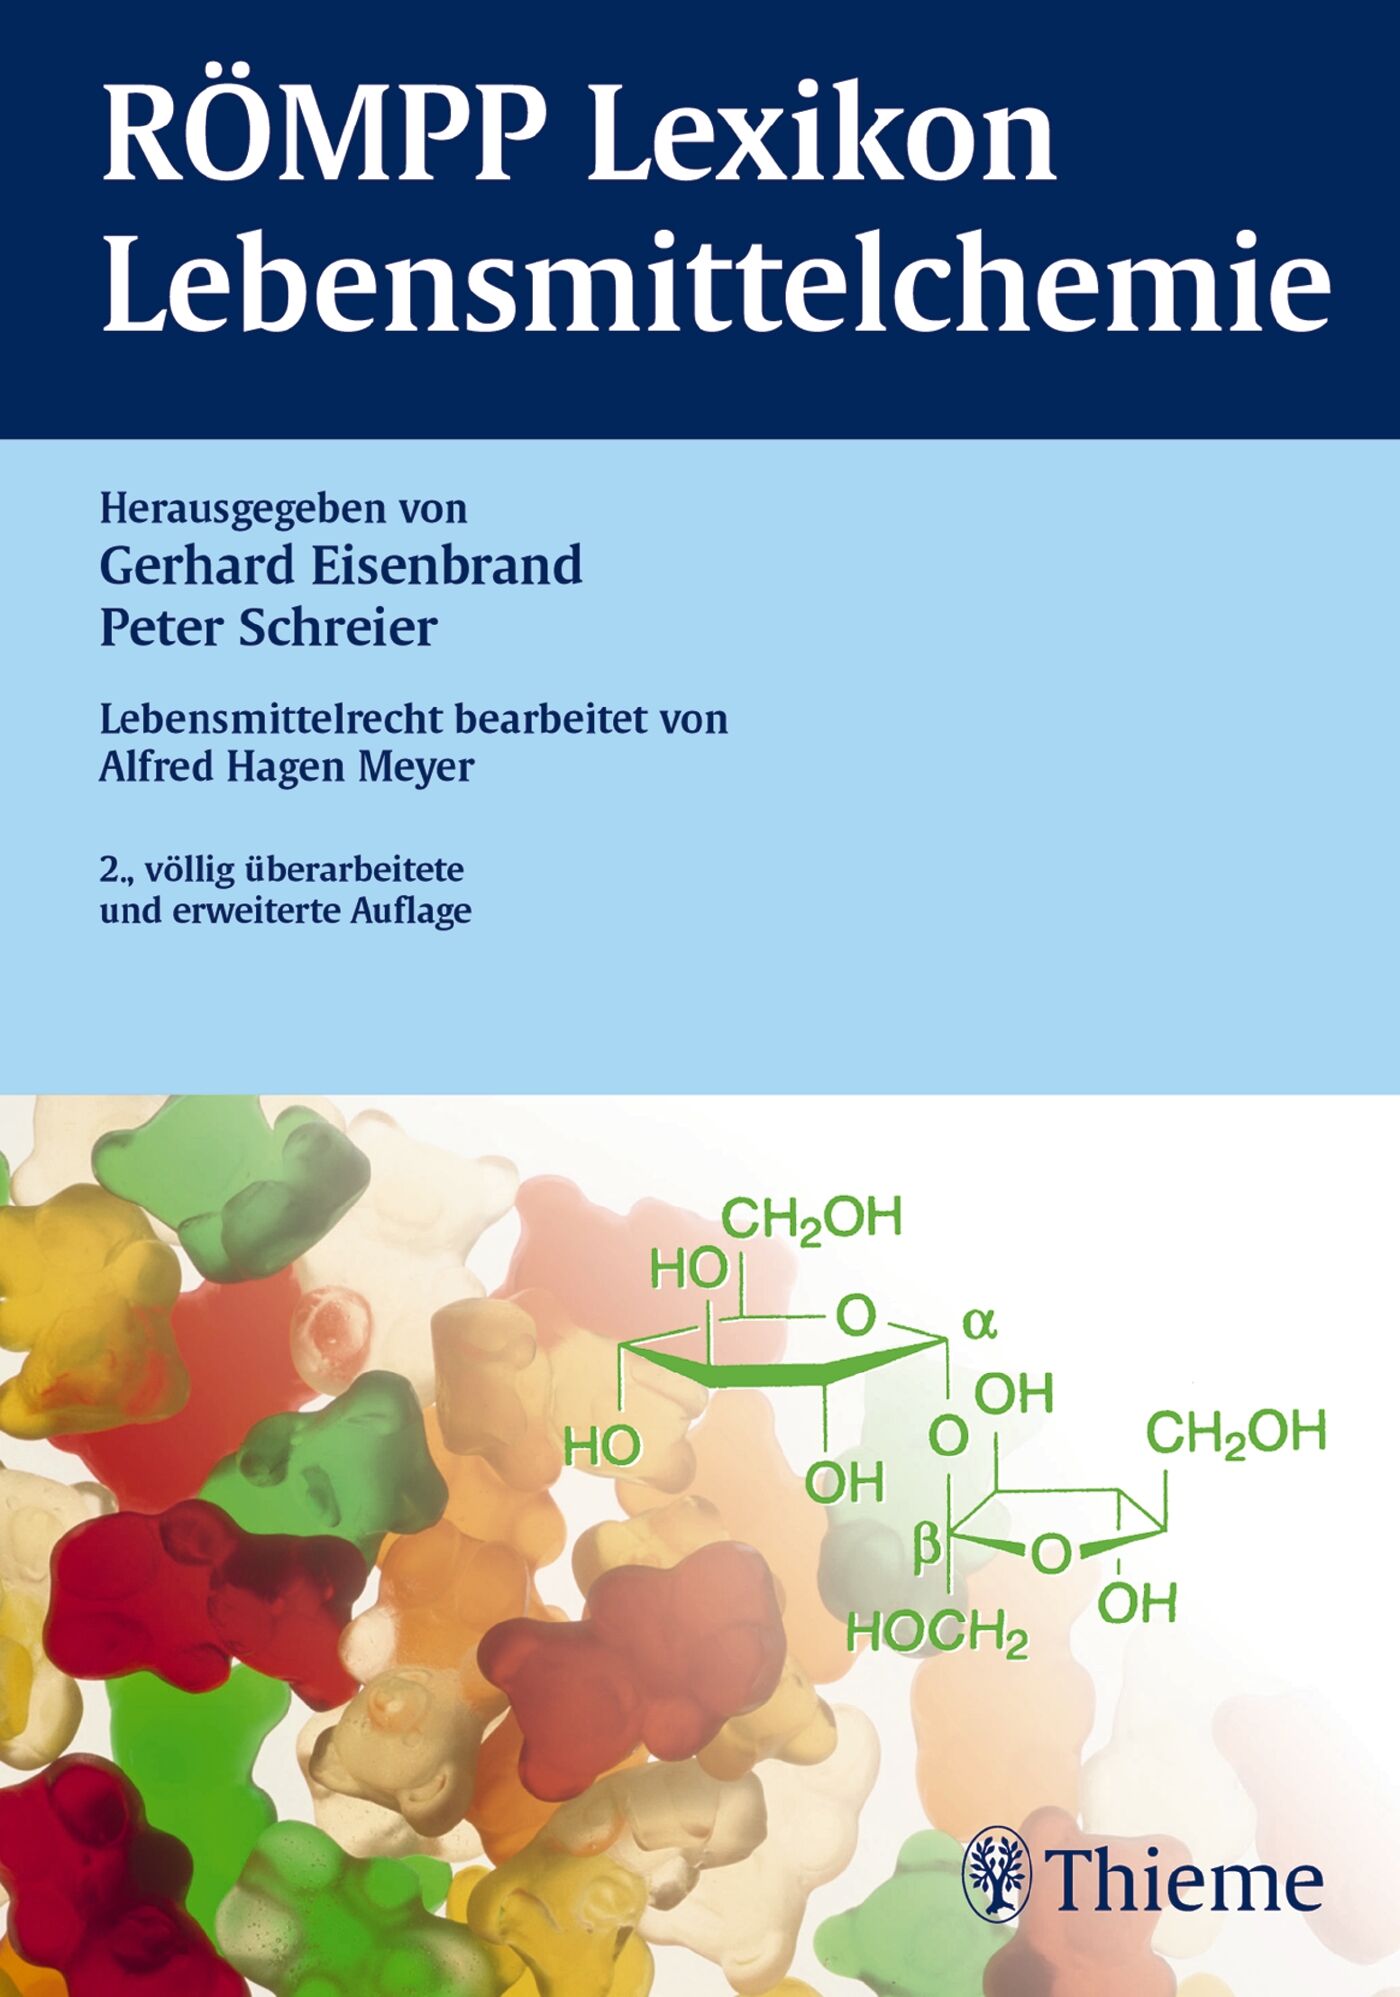 RÖMPP Lexikon Lebensmittelchemie, 2. Auflage, 2006, 9783131792822